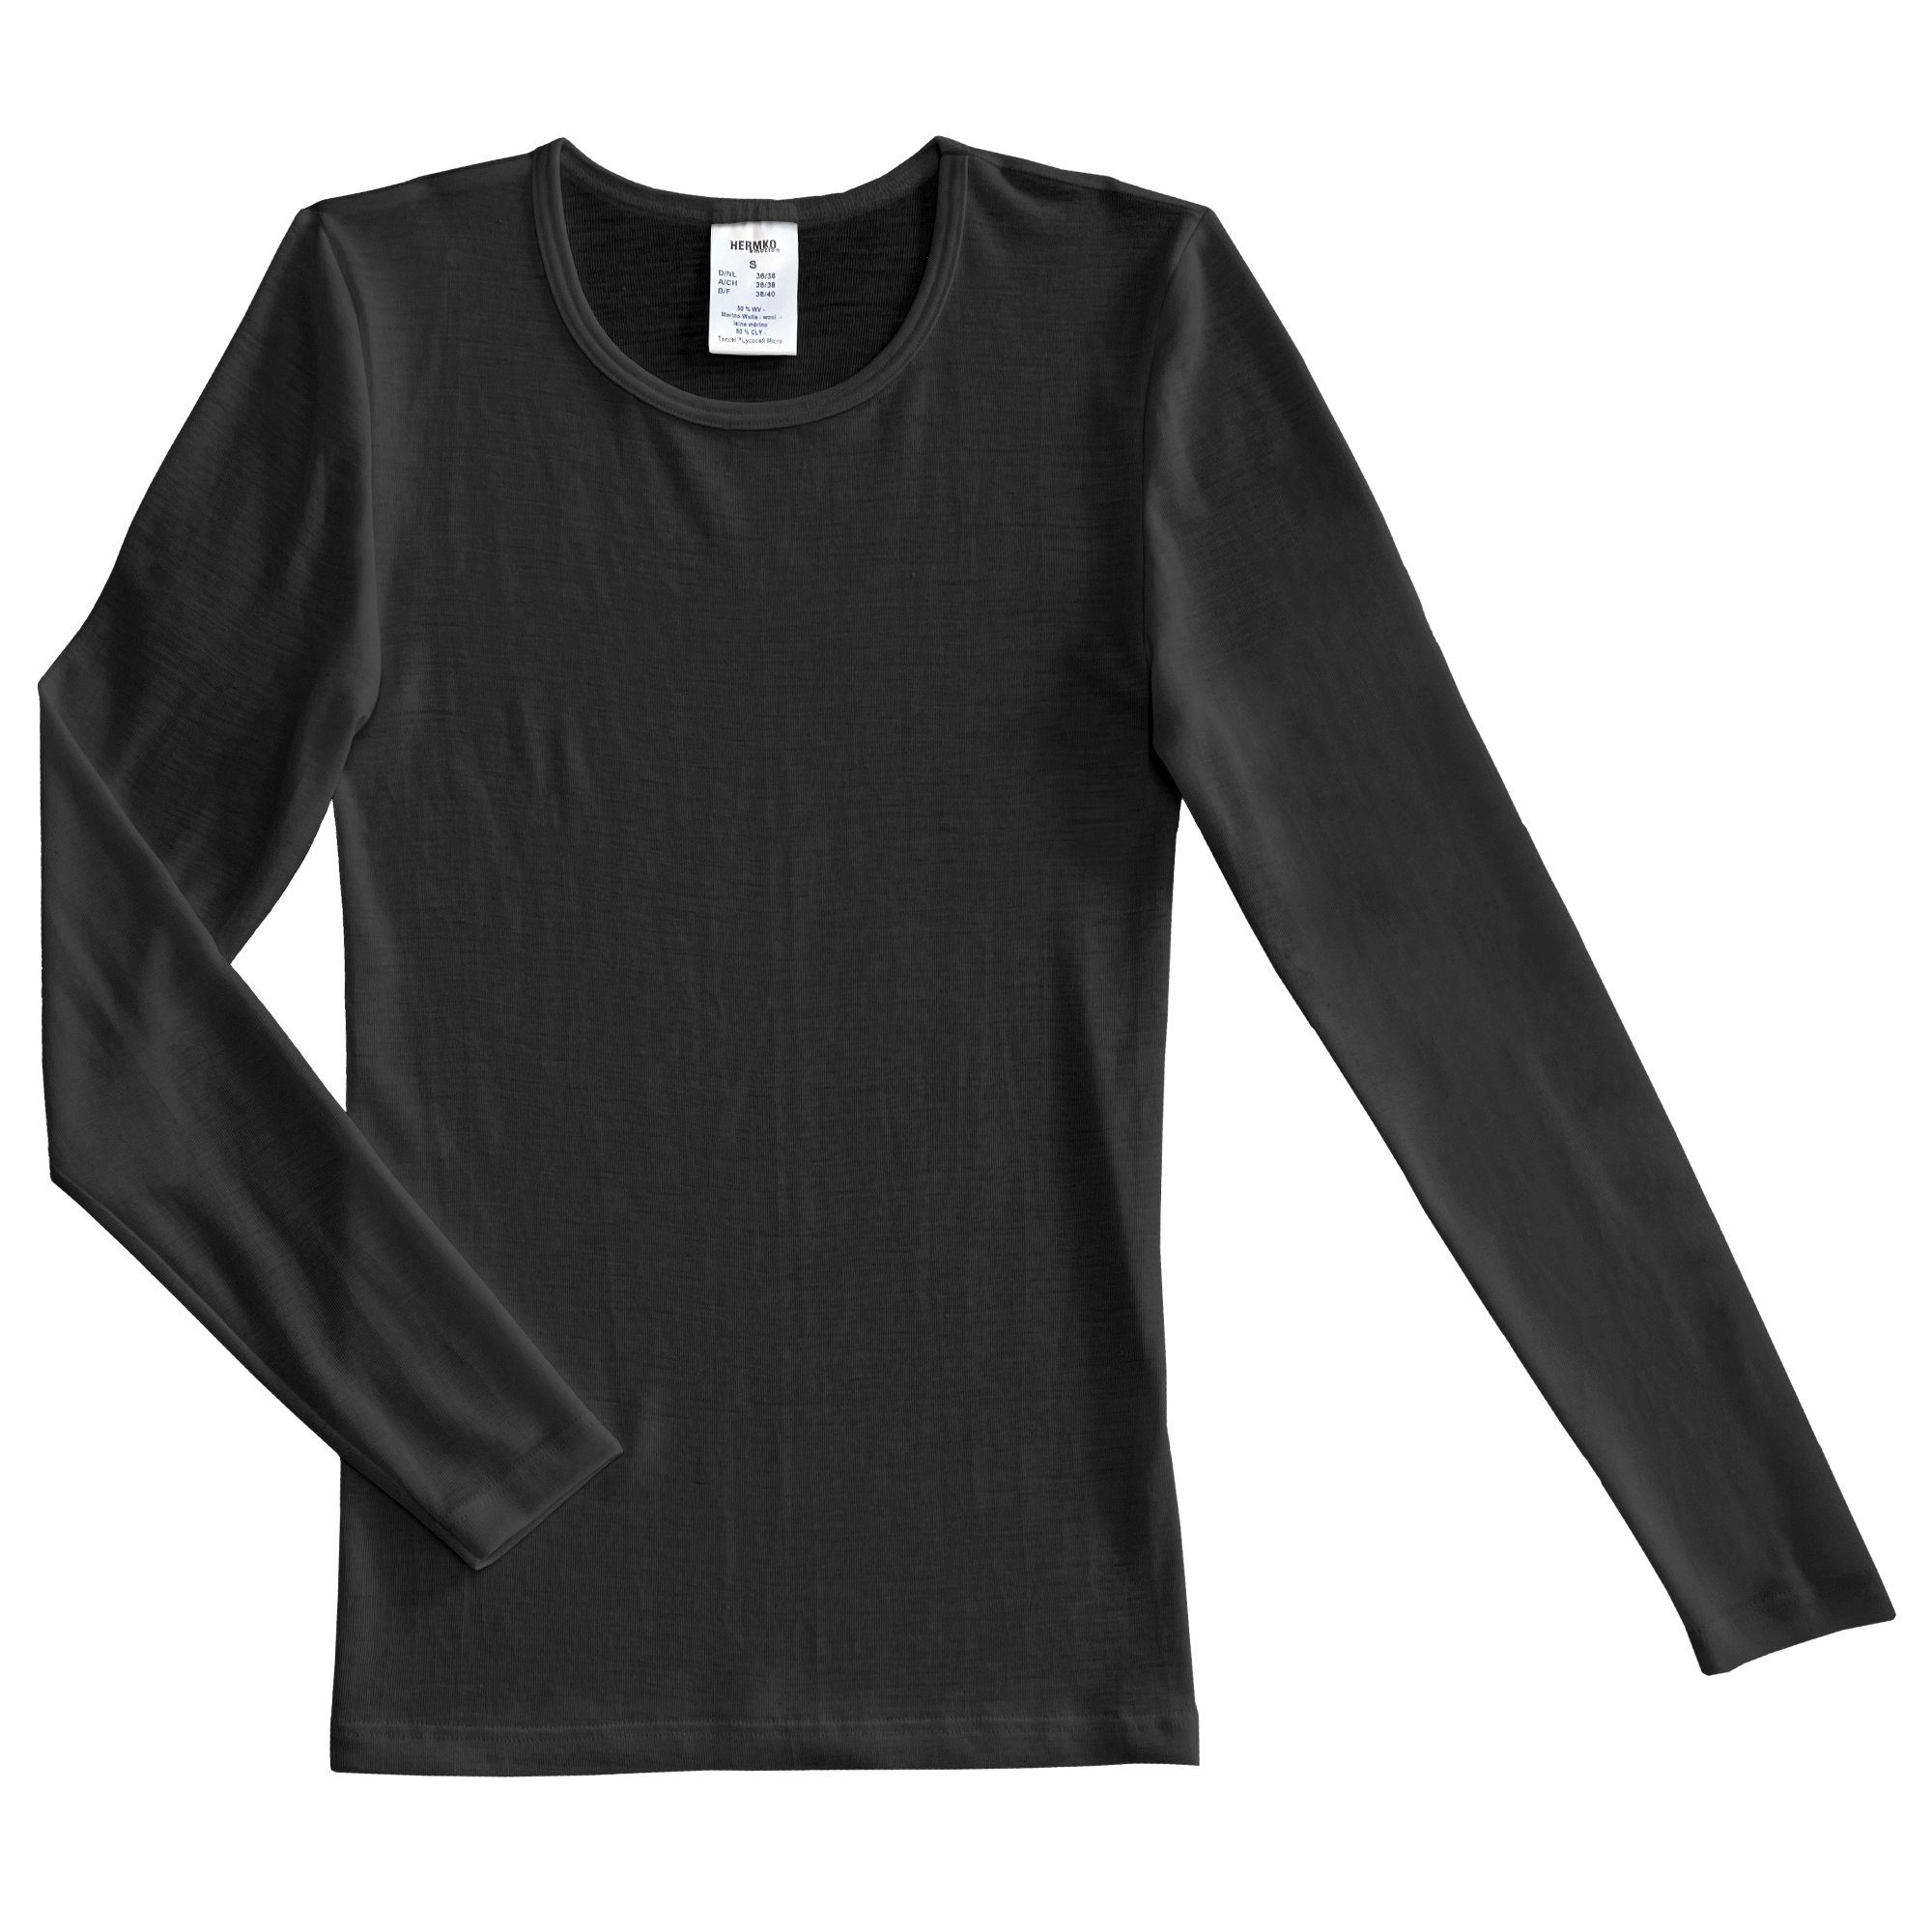 Damen 40830 langarm Unterziehshirt Wolle Tencel Shirt aus / HERMKO schwarz